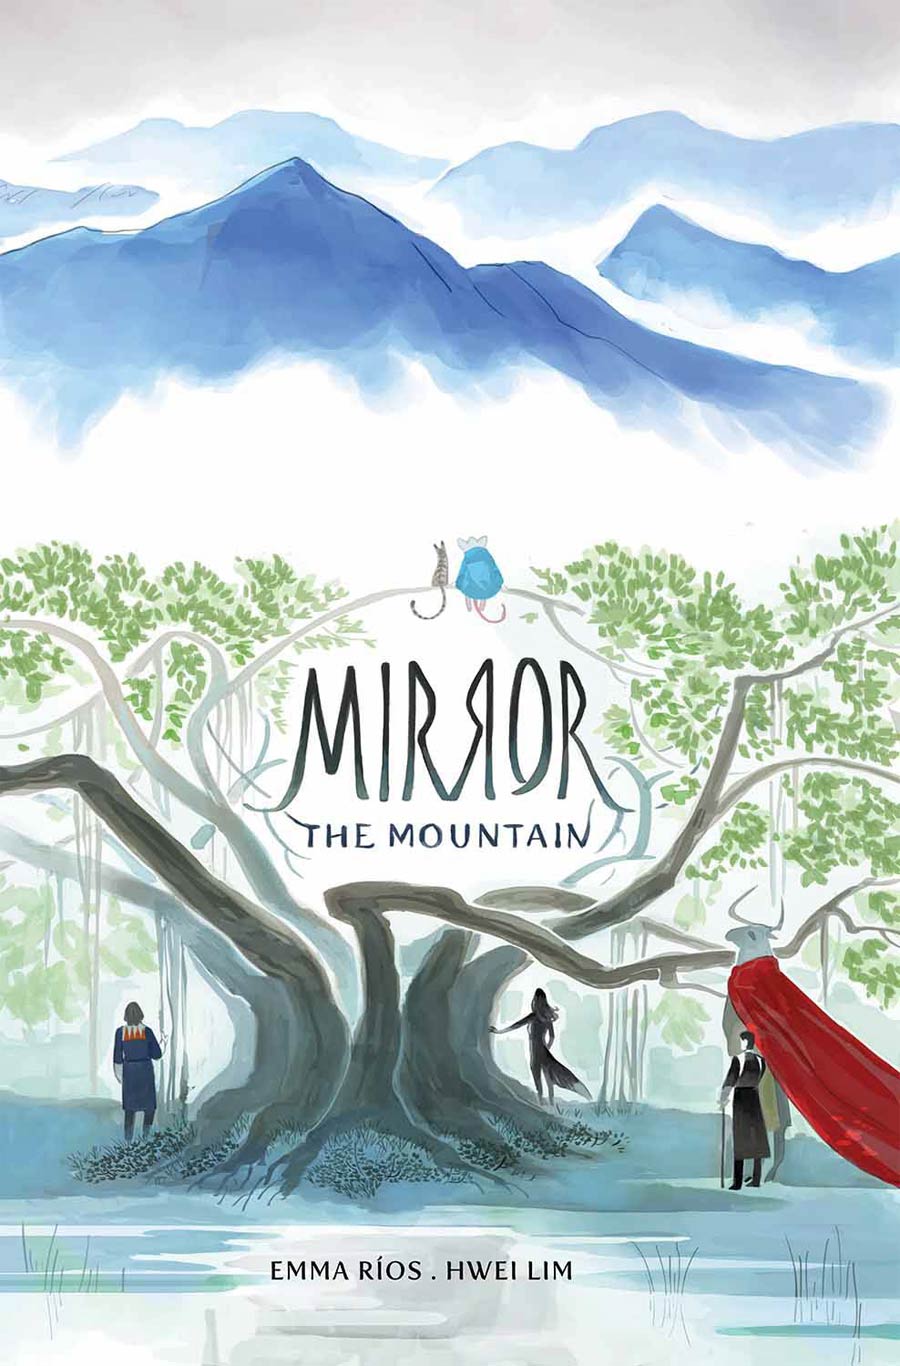 Mirror: The Mountain cover